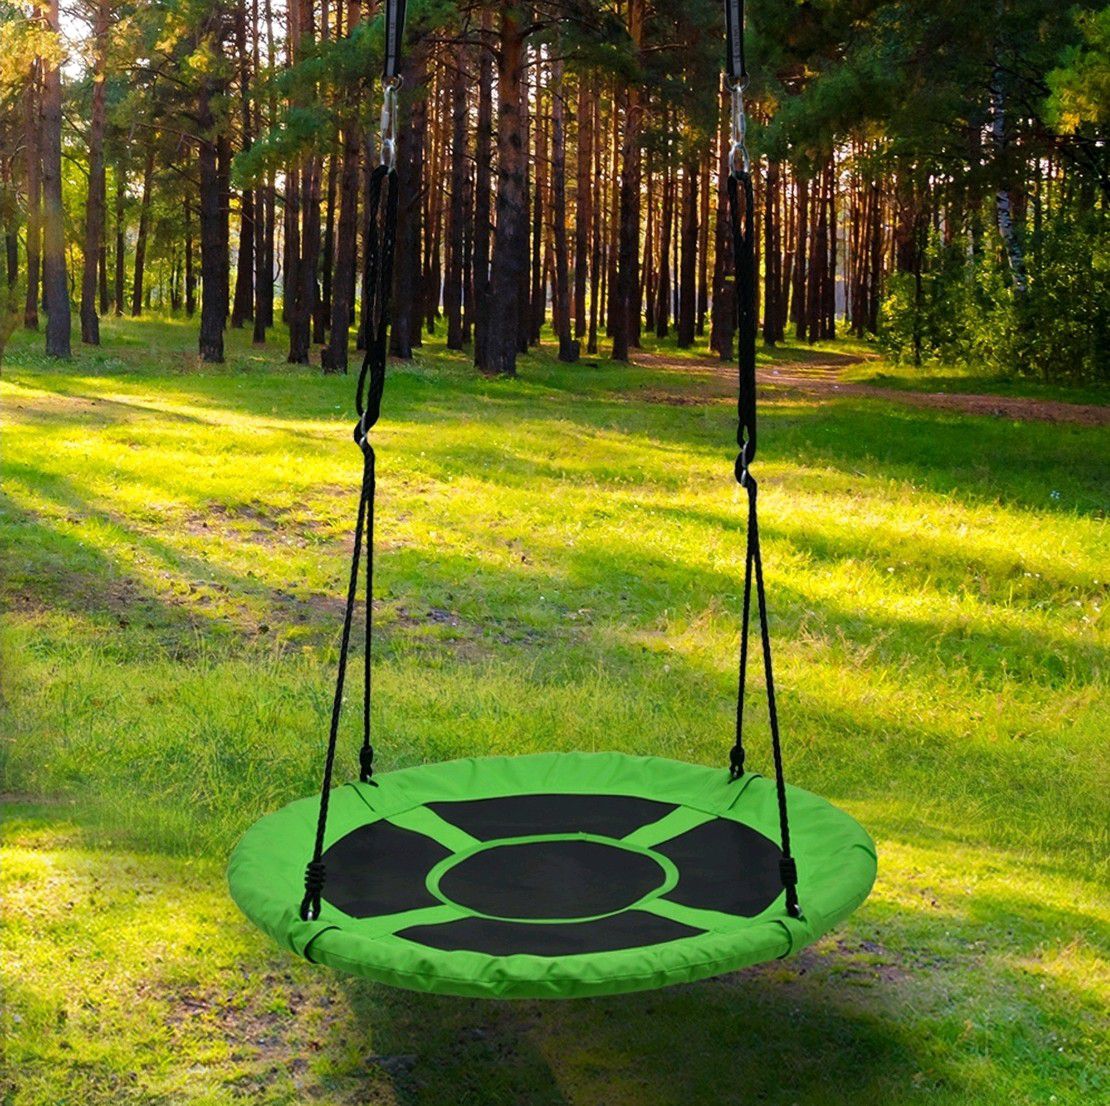 Detachable Swing Sets for Kids Playground Platform Saucer Tree Swing Rope 1M 40'' Diameter